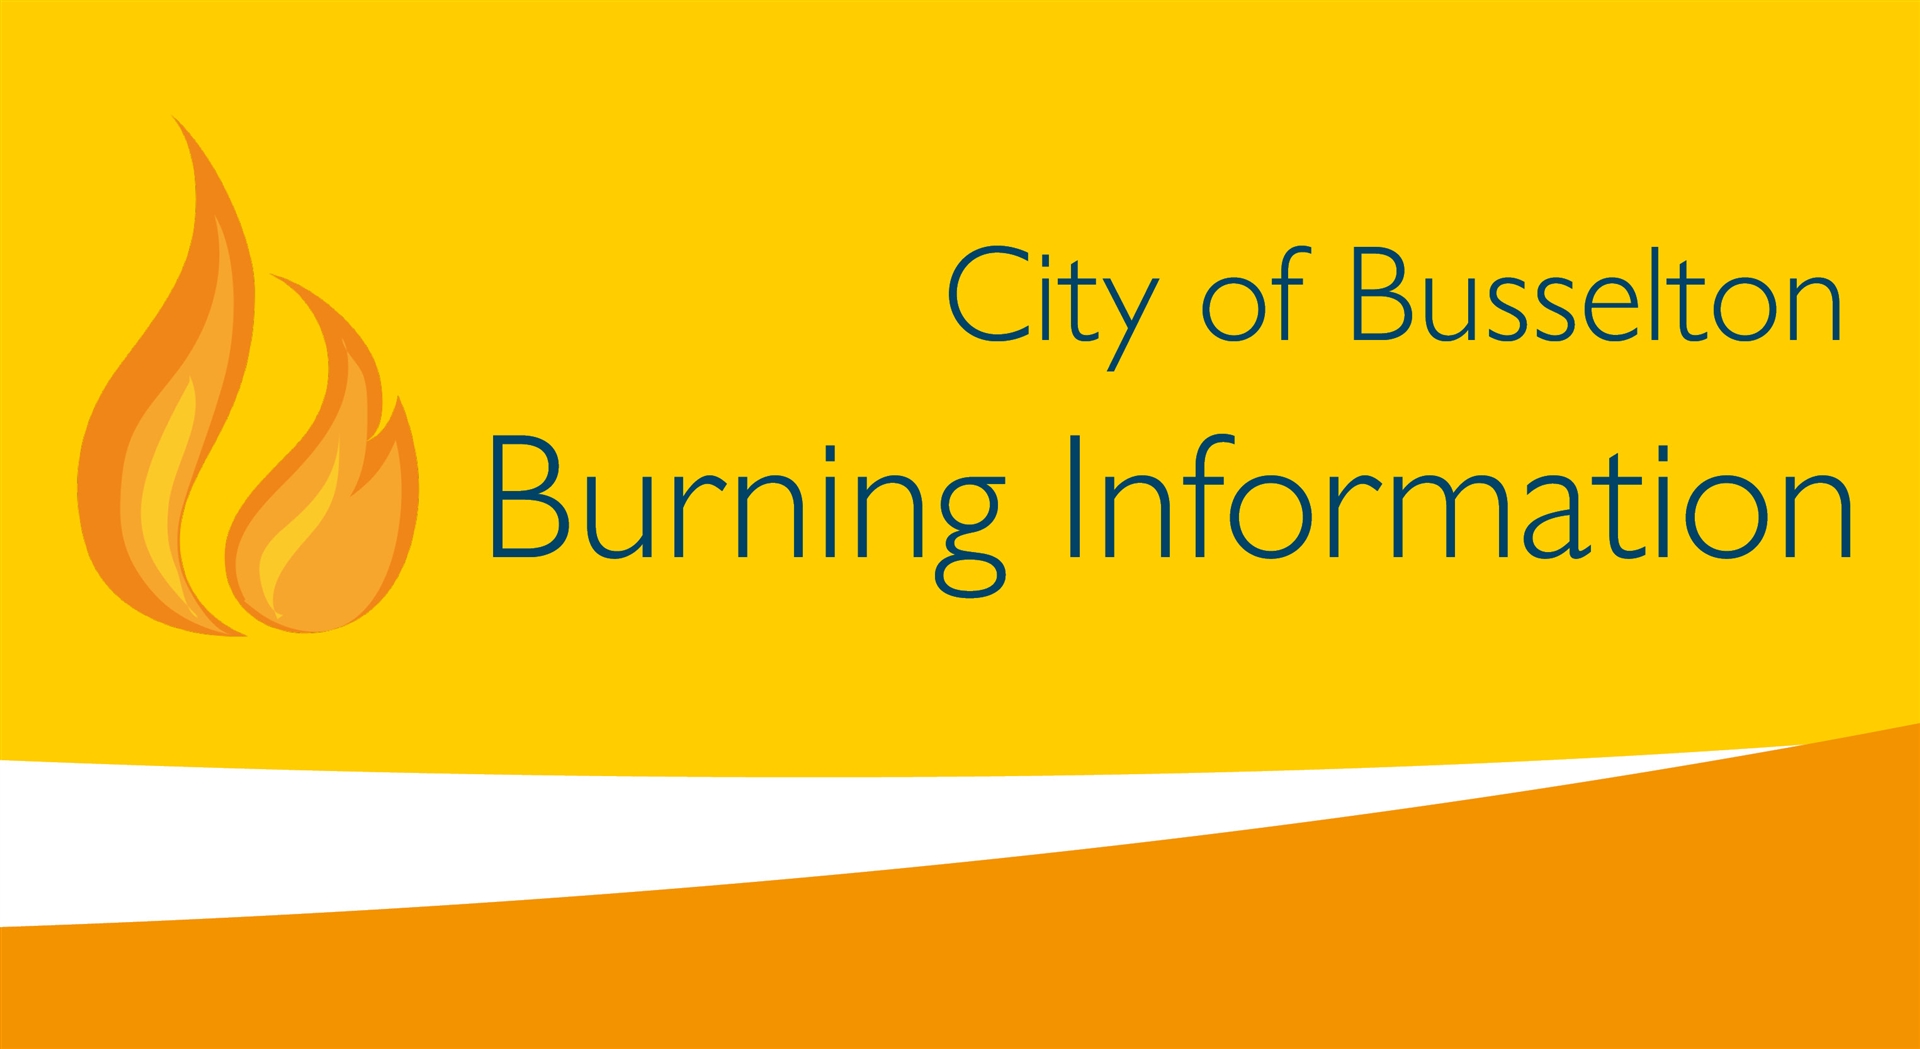 City of Busselton Burning Information